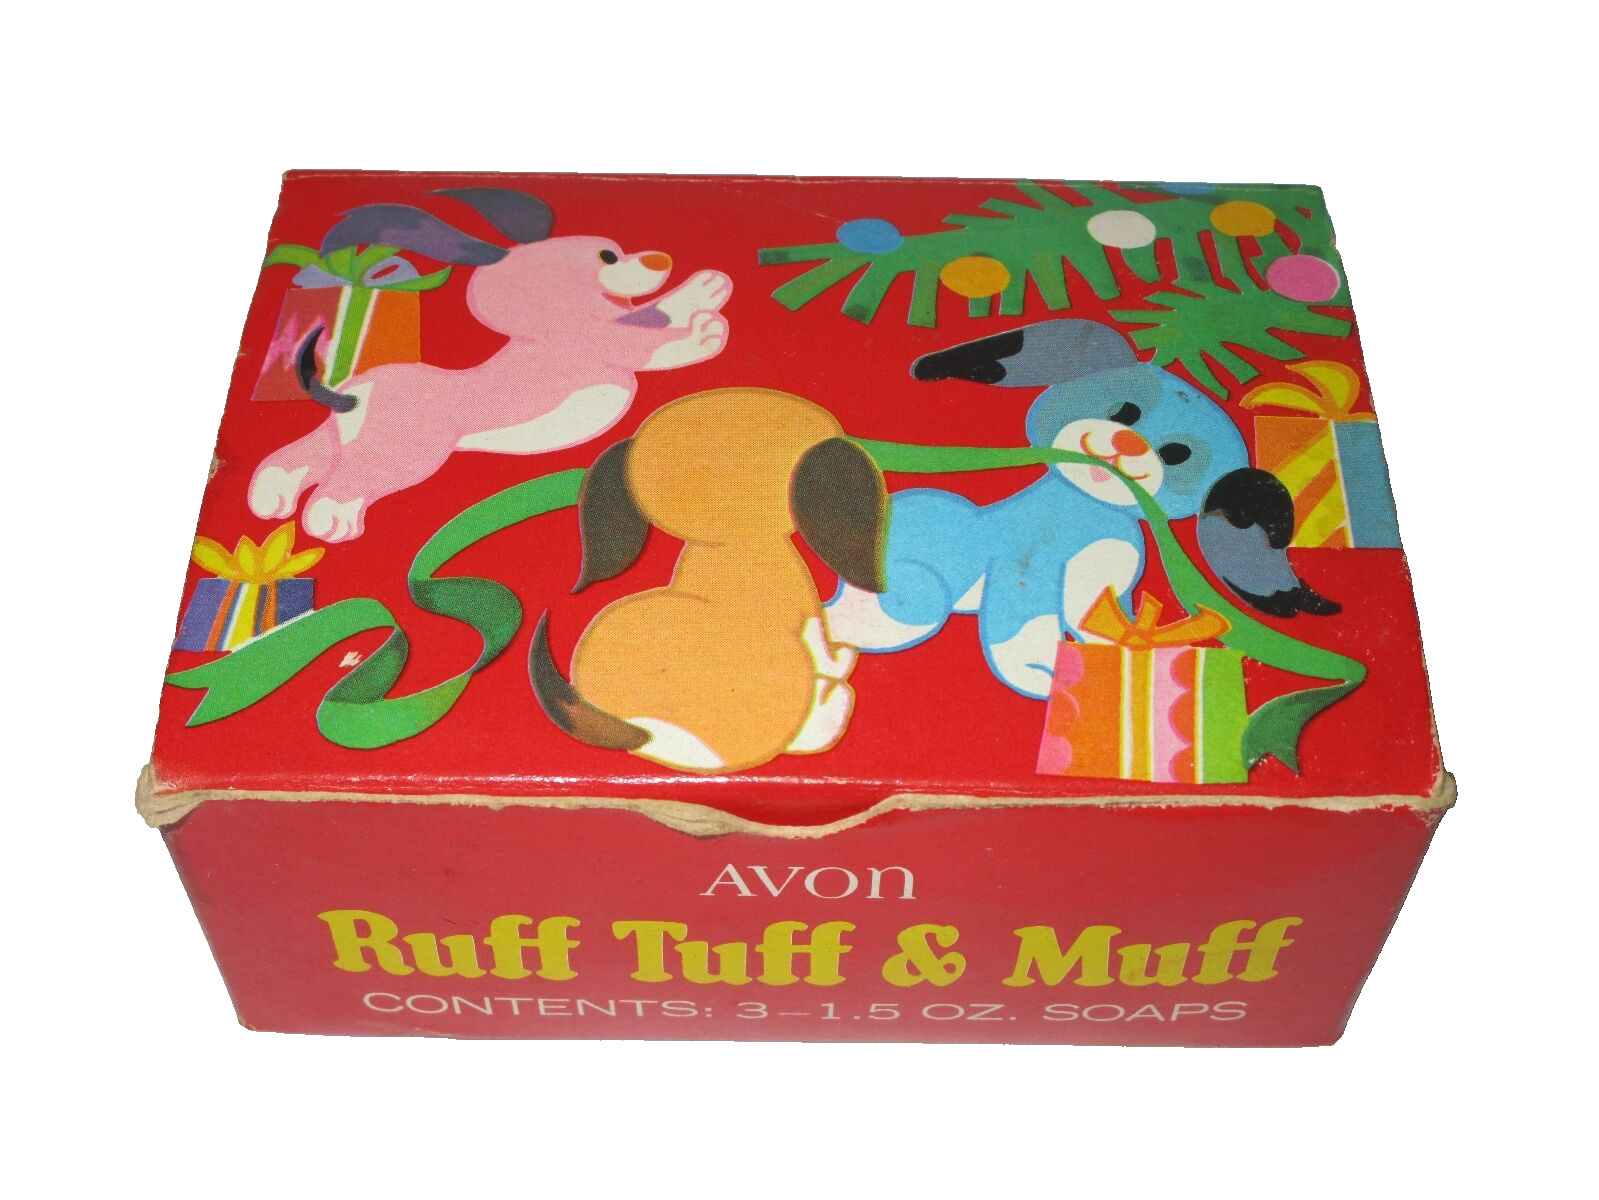 Avon 1968 Ruff Tuff & Muff Soaps